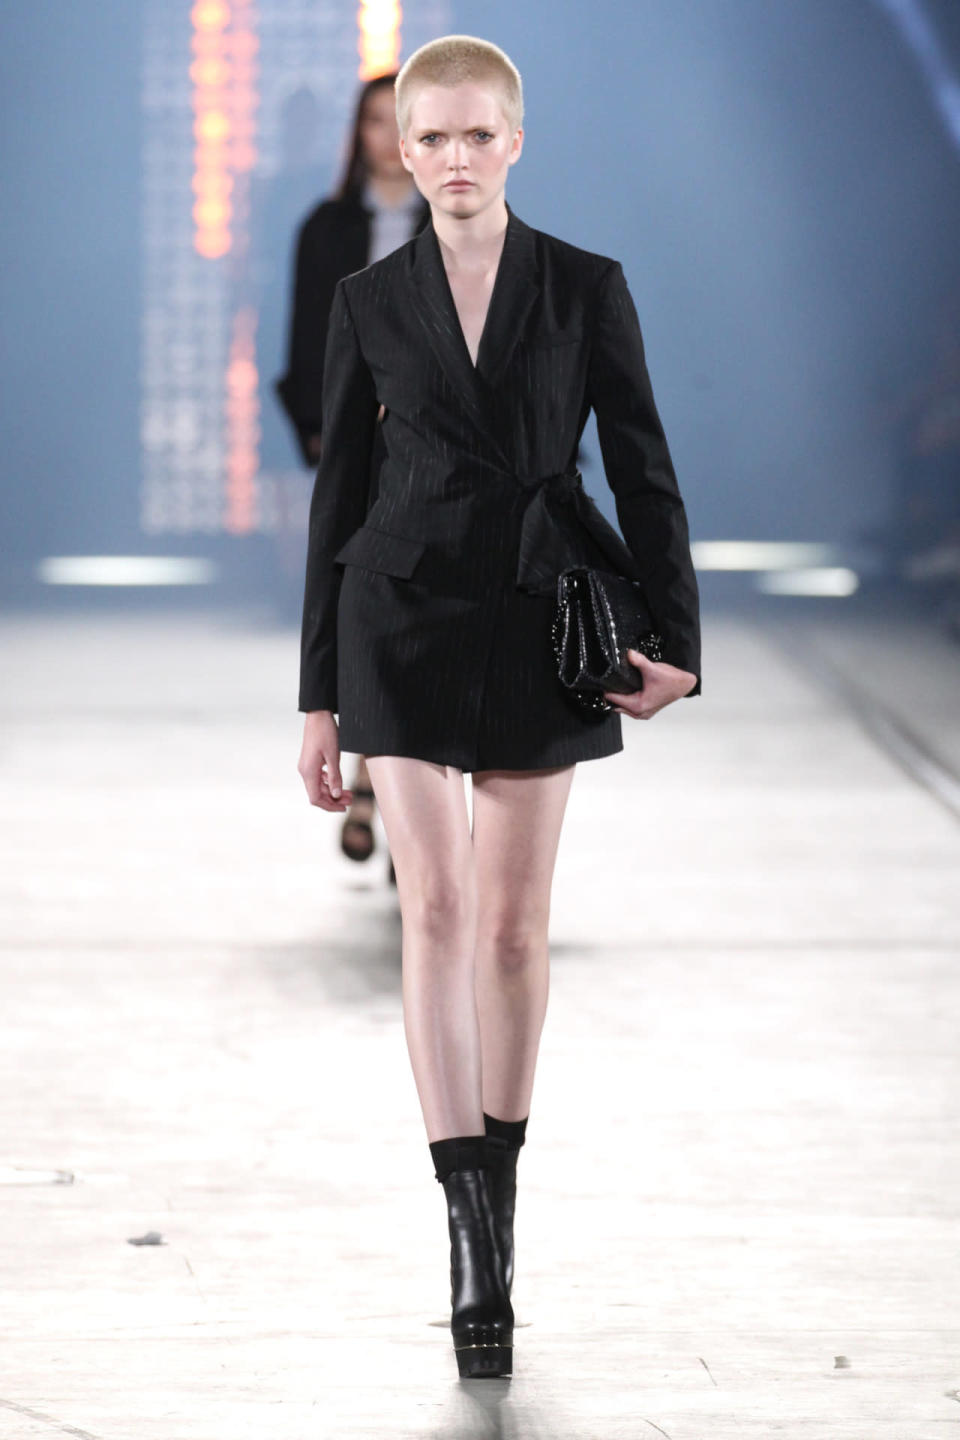 Ruth Bell walks Versace’s spring 2016 runway show in Milan.